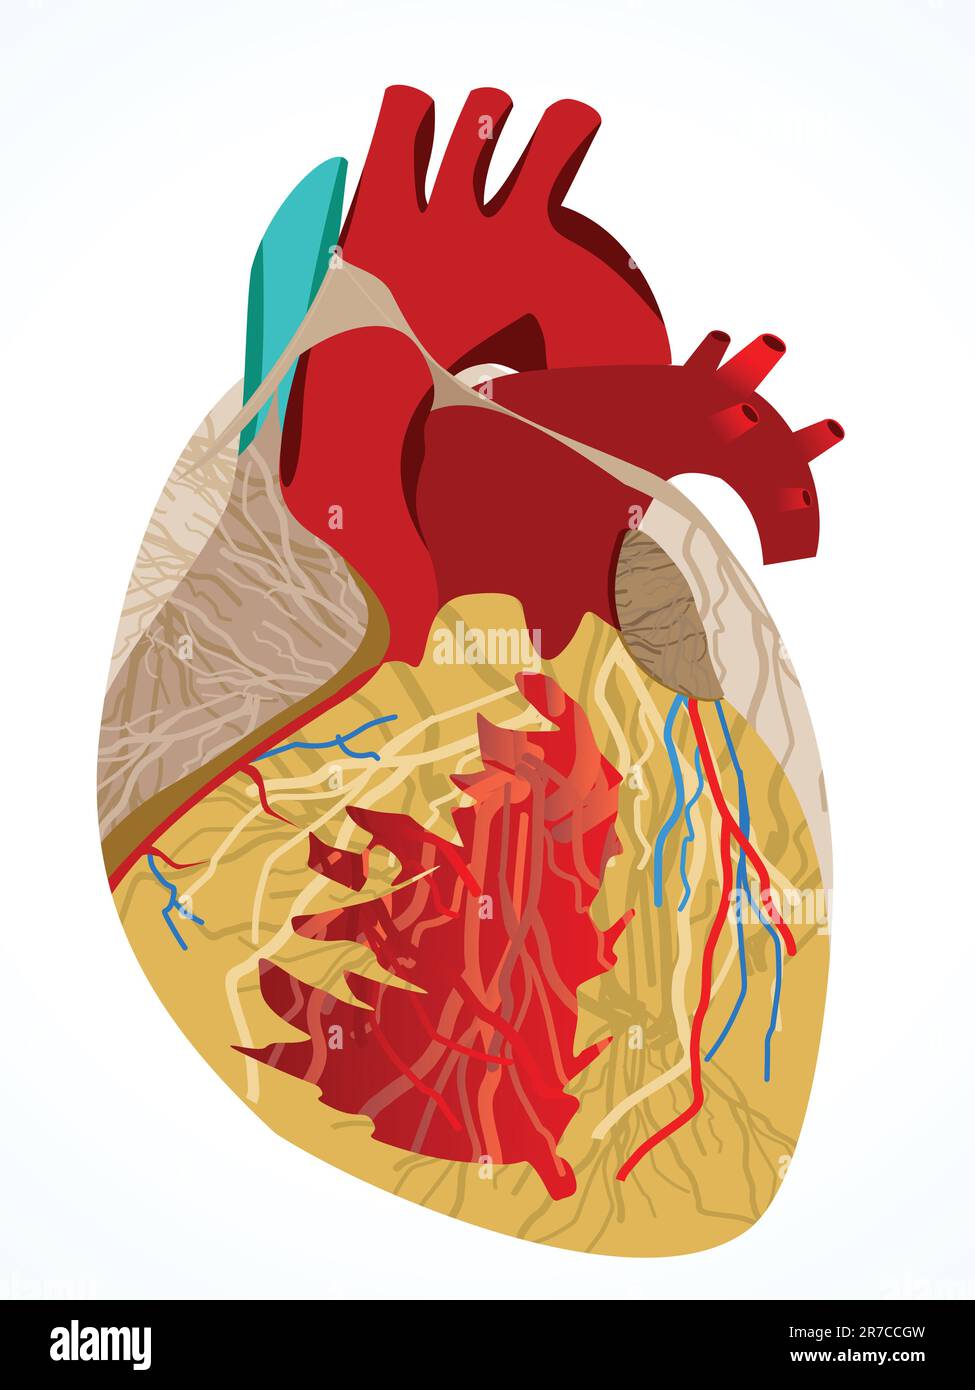 abstract human heart vector illustration Stock Vector